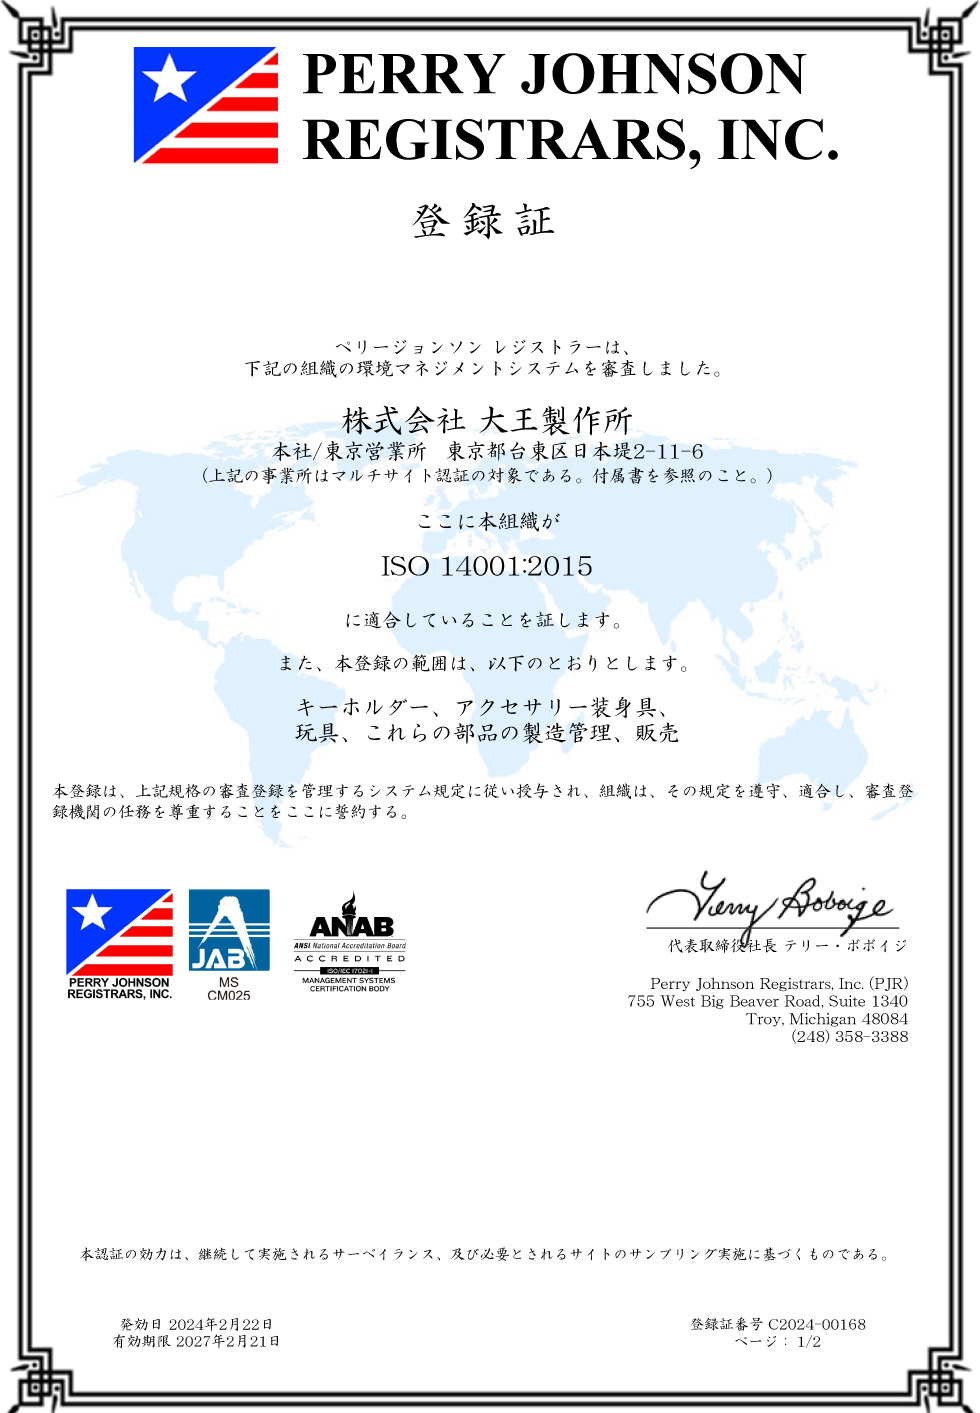 ISO14001 registration certificate